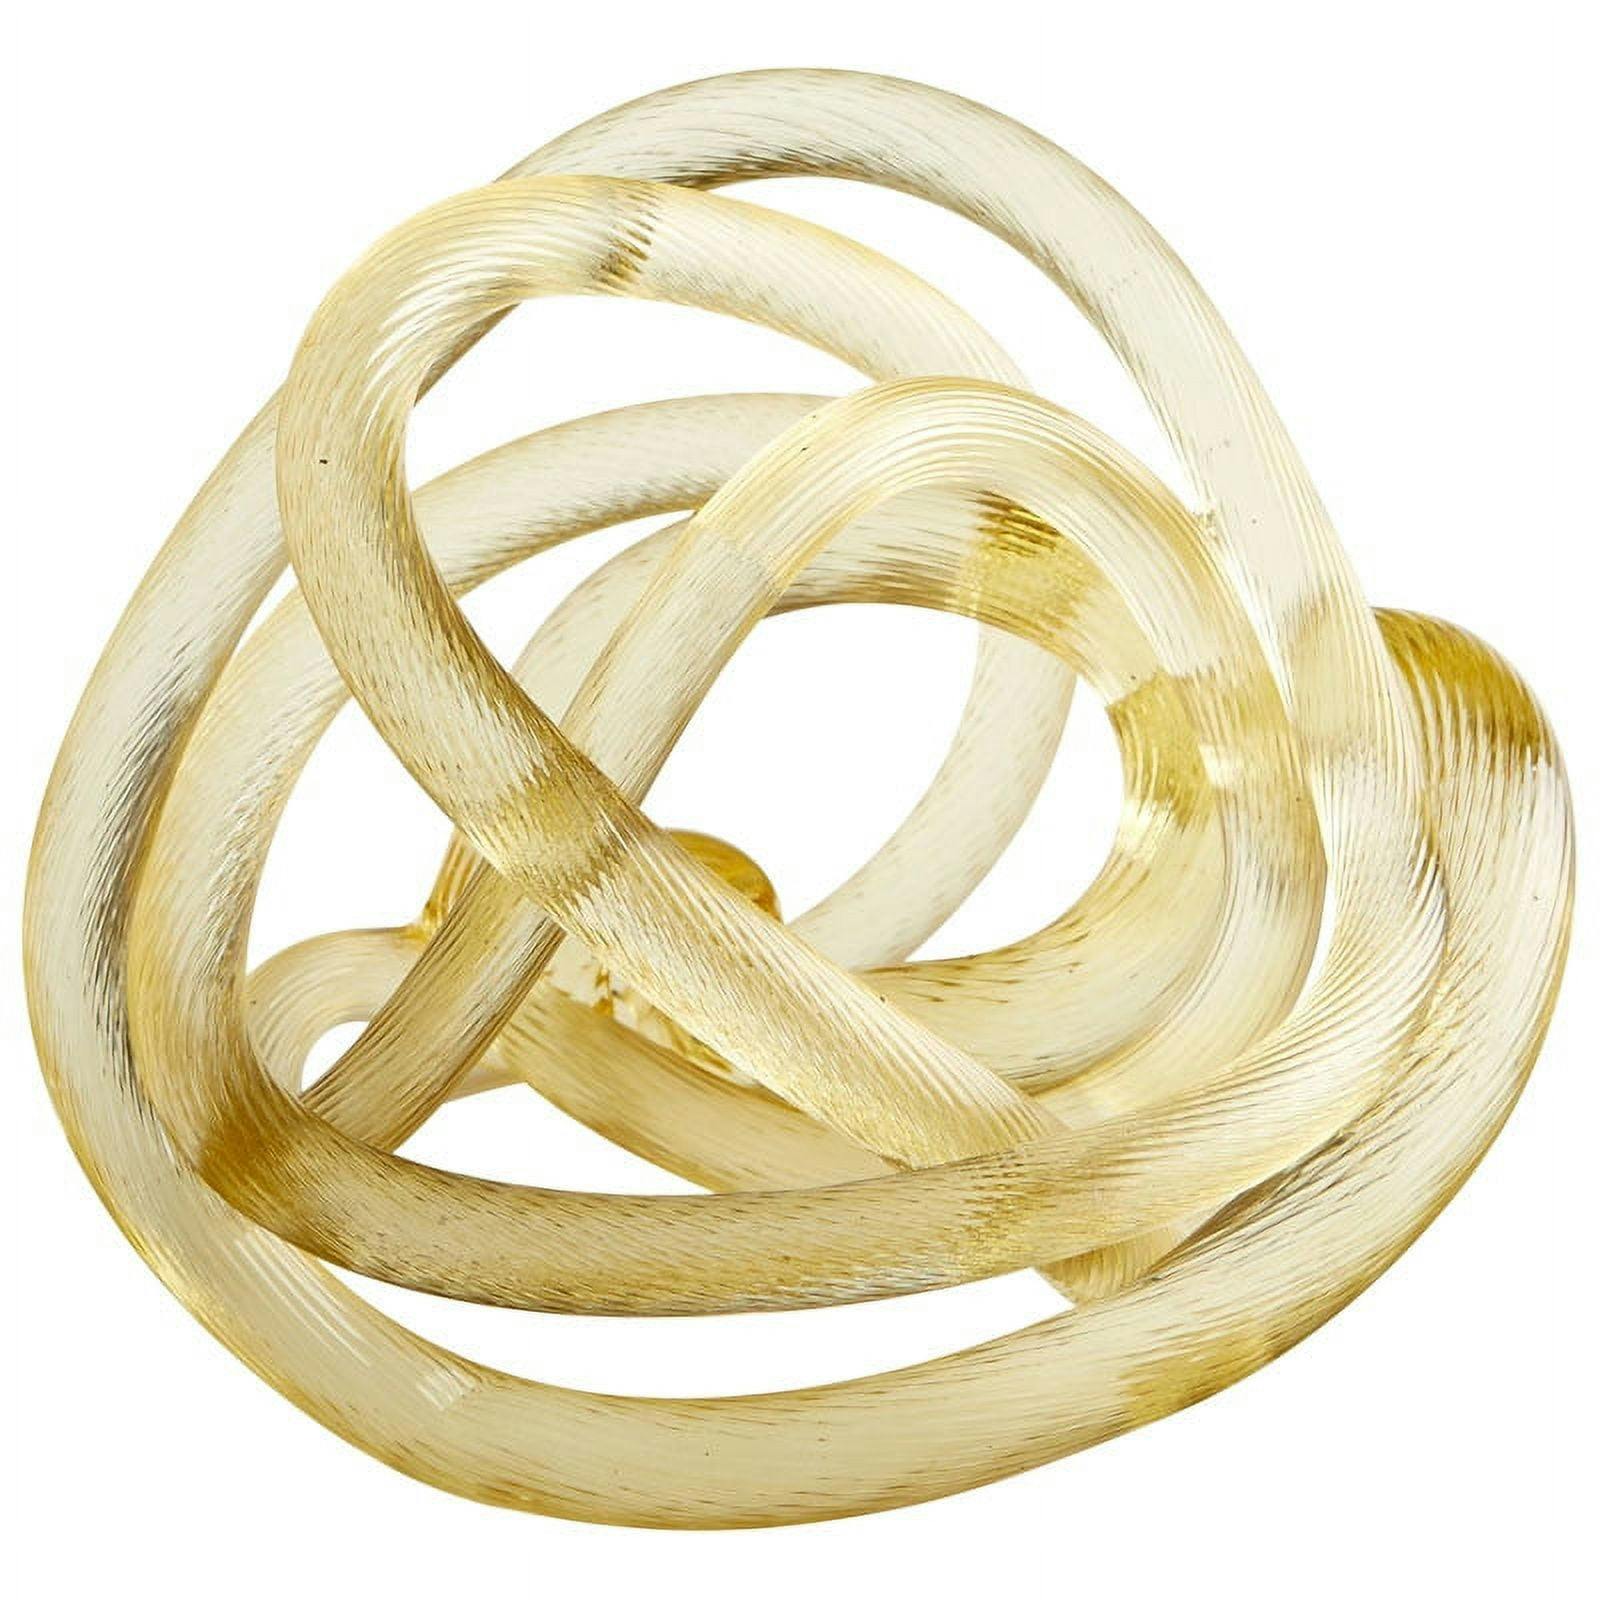 Elegant Gold Glass Orb Sculpture with Openwork Knot Design